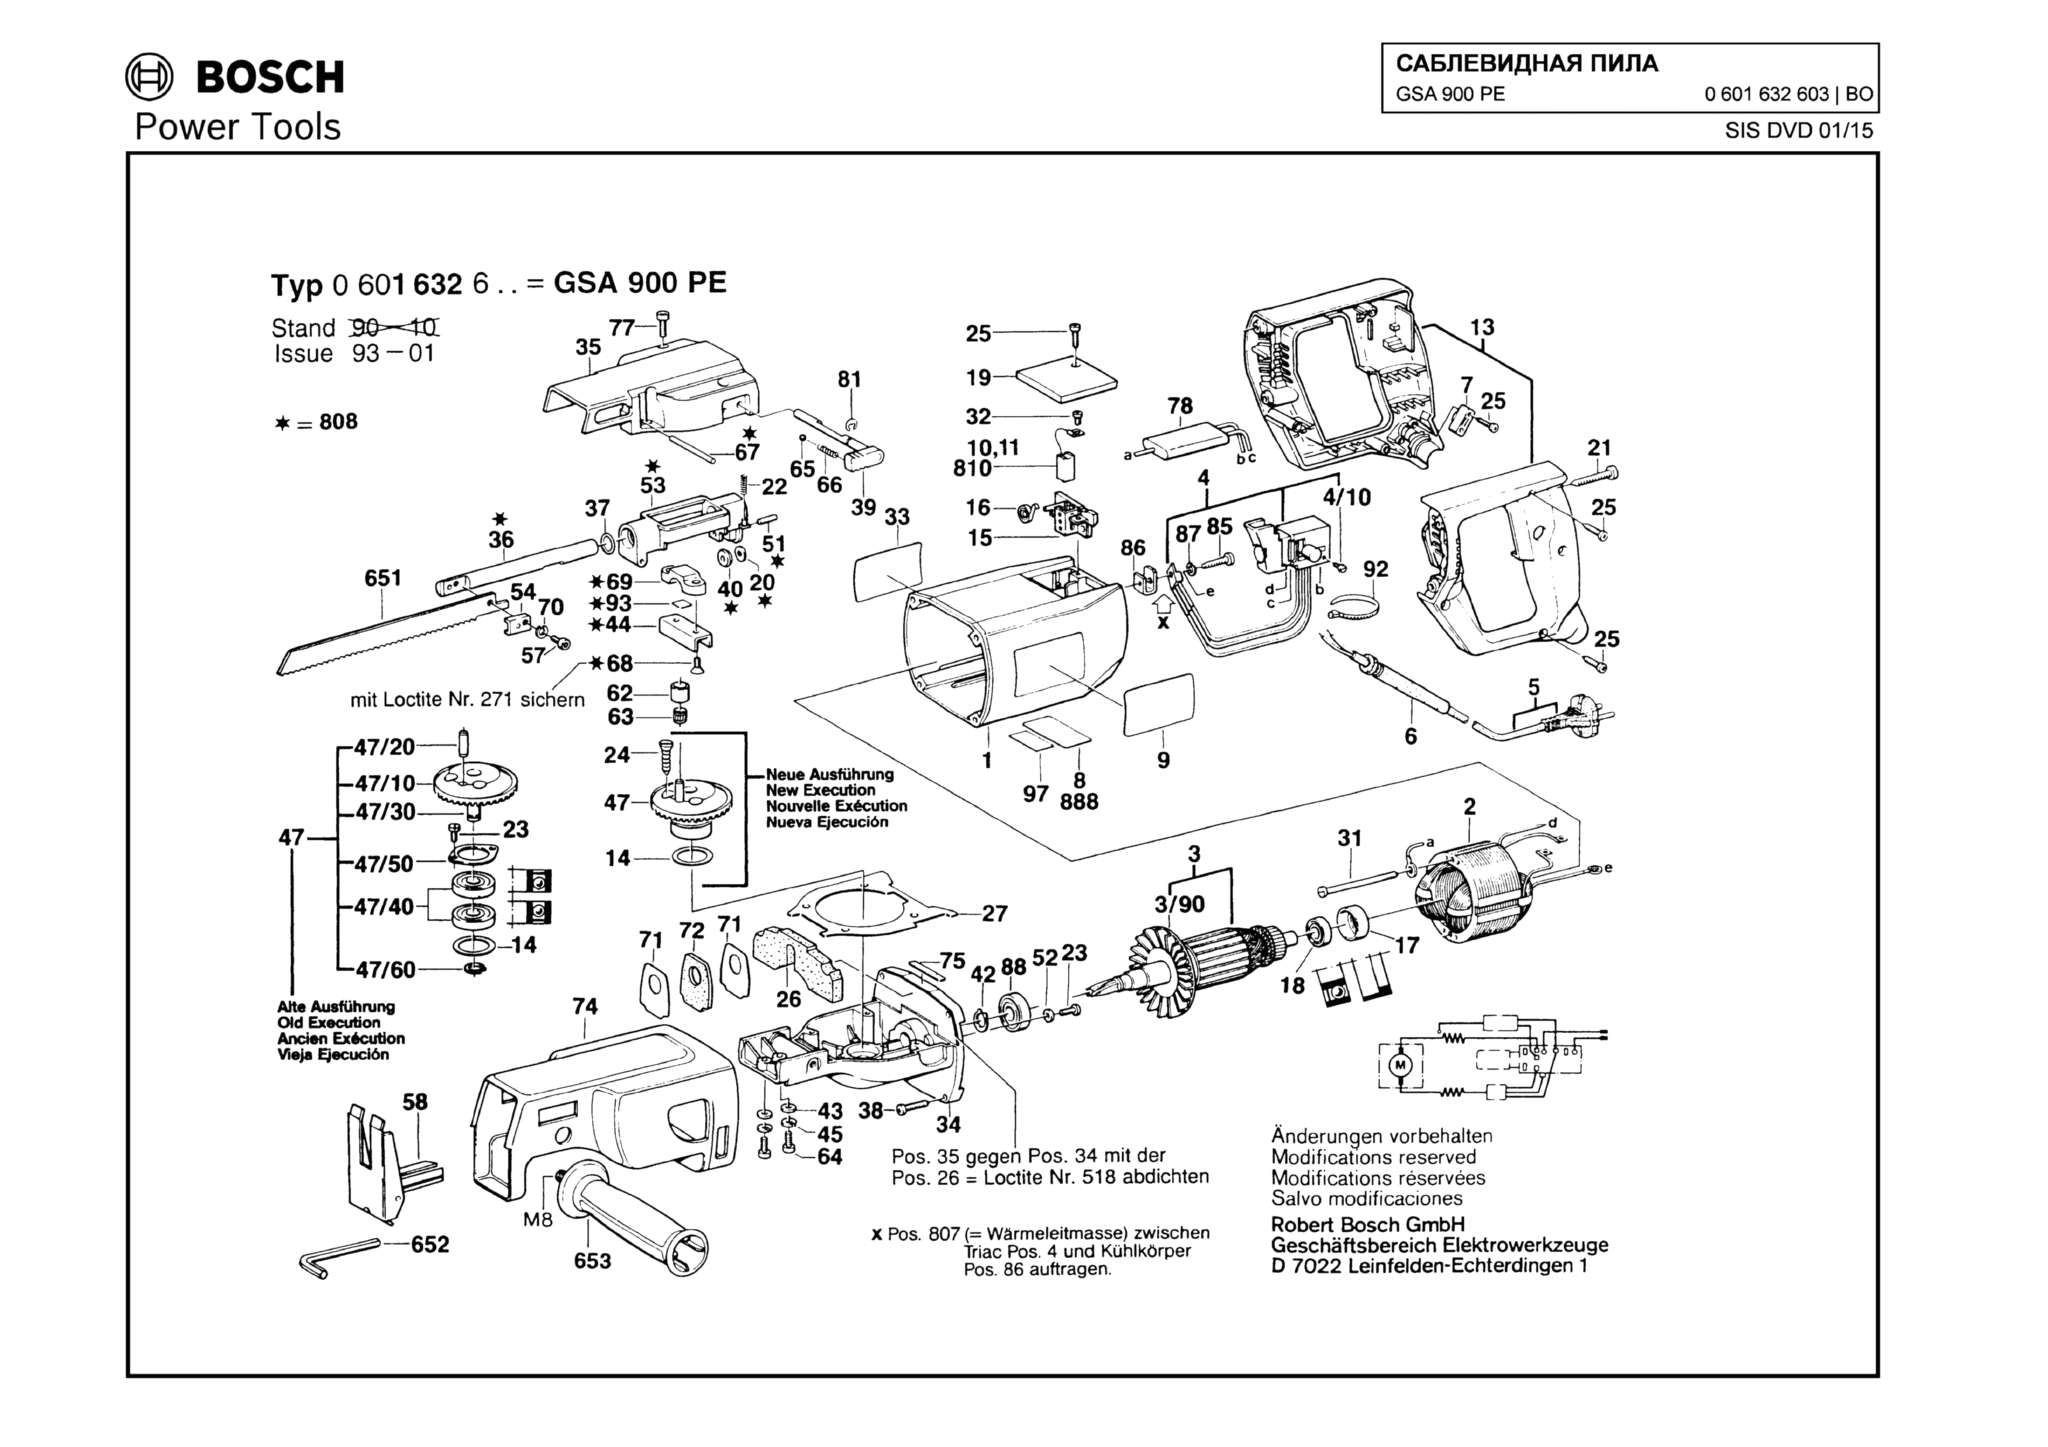 Запчасти, схема и деталировка Bosch GSA 900 PE (ТИП 0601632603)